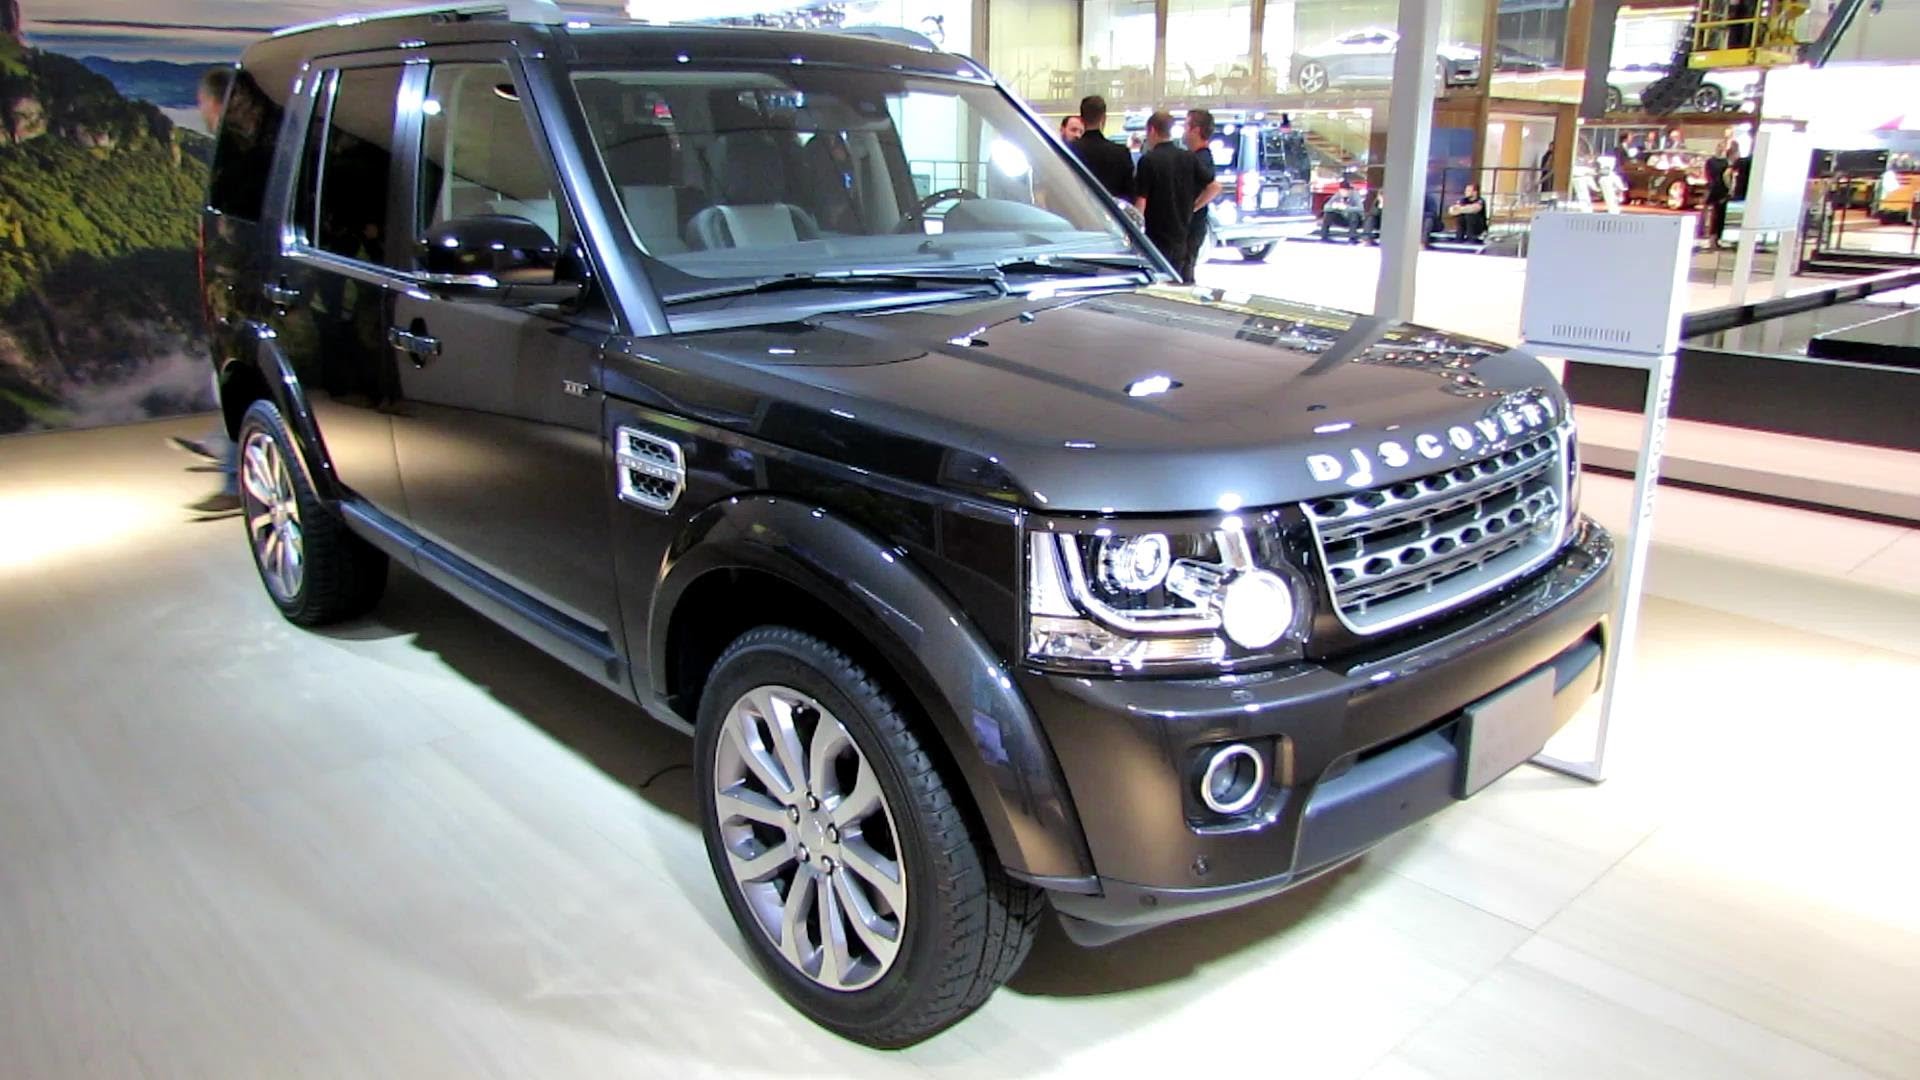 Продажа дискавери. Ленд Ровер Дискавери 2014. Land Rover Discovery 2014. Land Rover Дискавери 2014. Land Rover Discovery 4 2014.